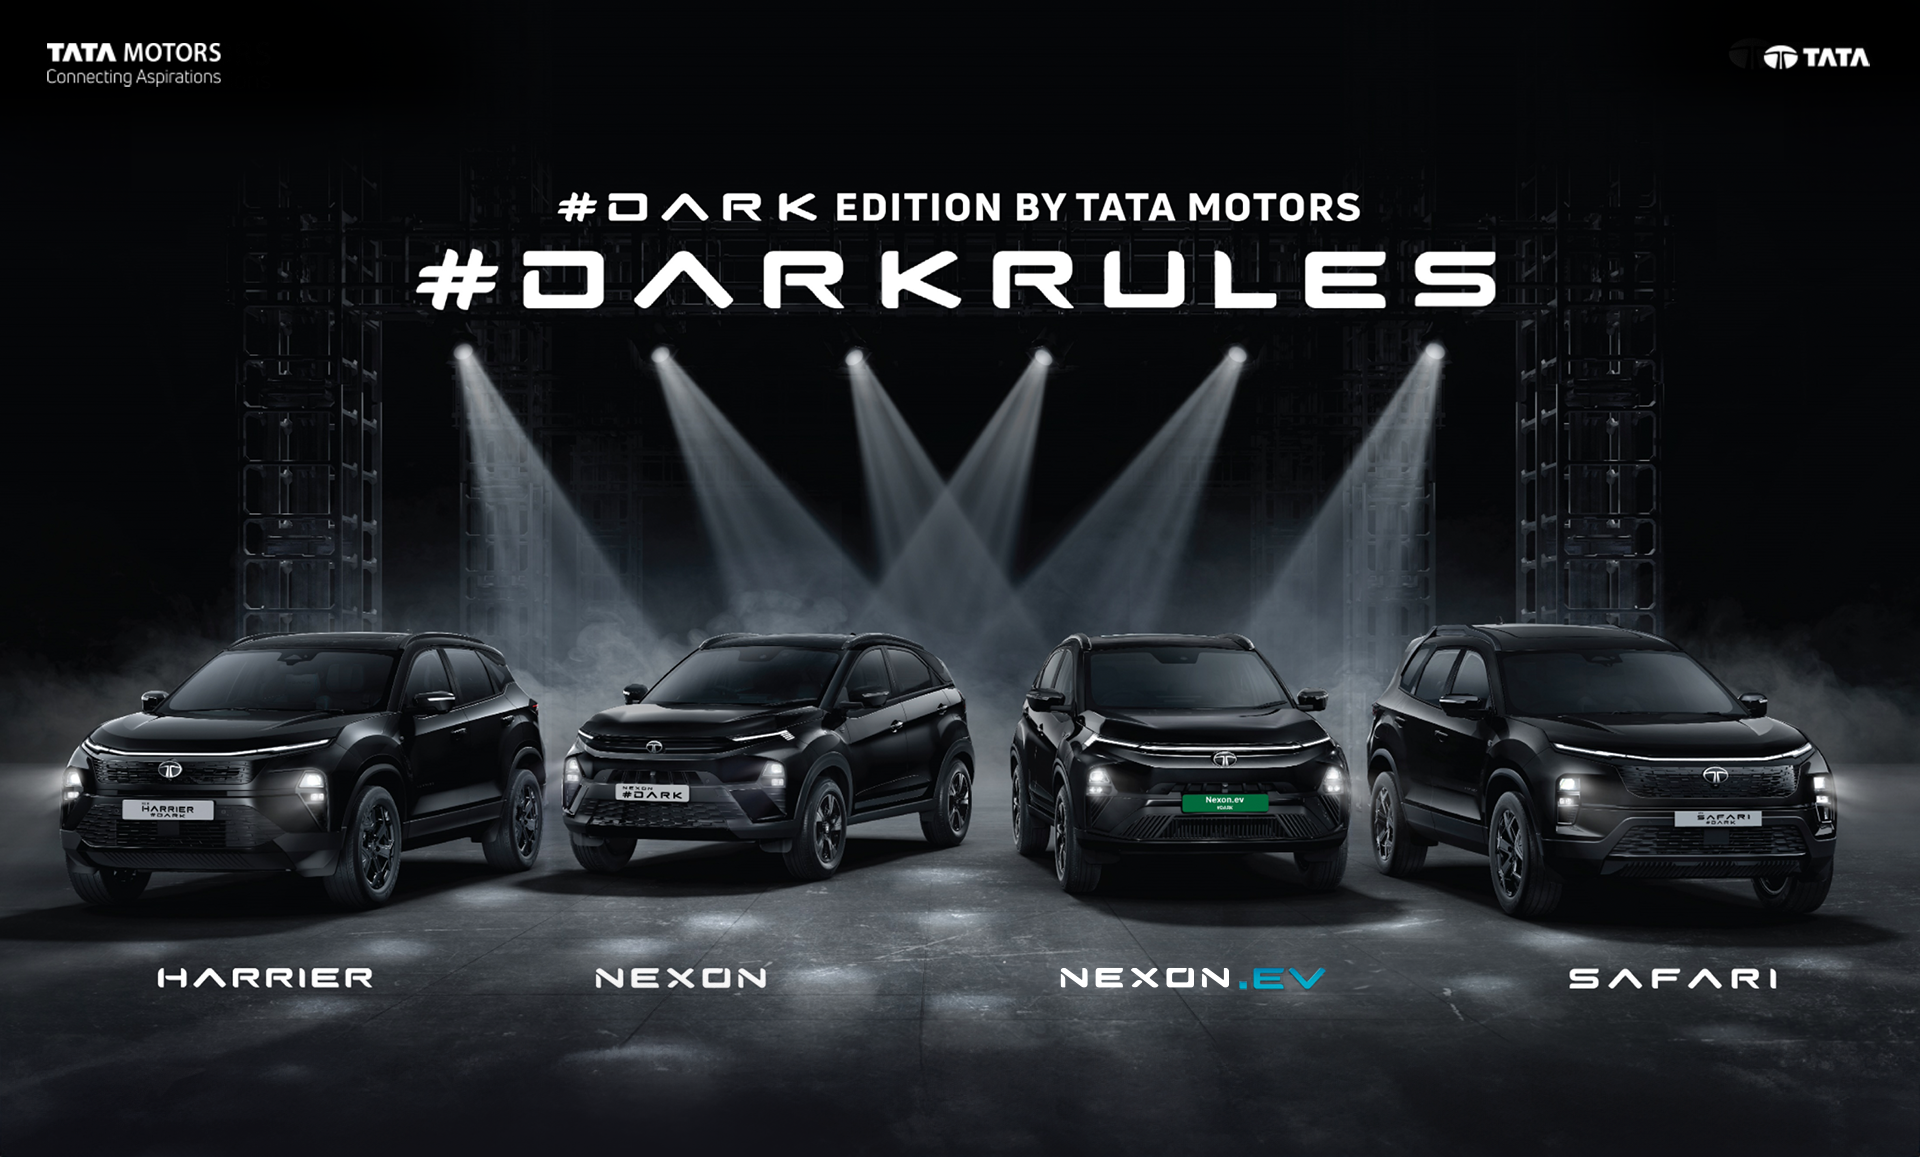 Tata Motors’ flagship #DARK series now available in its new SUVs  Launching the new Nexon.ev, Nexon, Harrier and Safari in #DAR